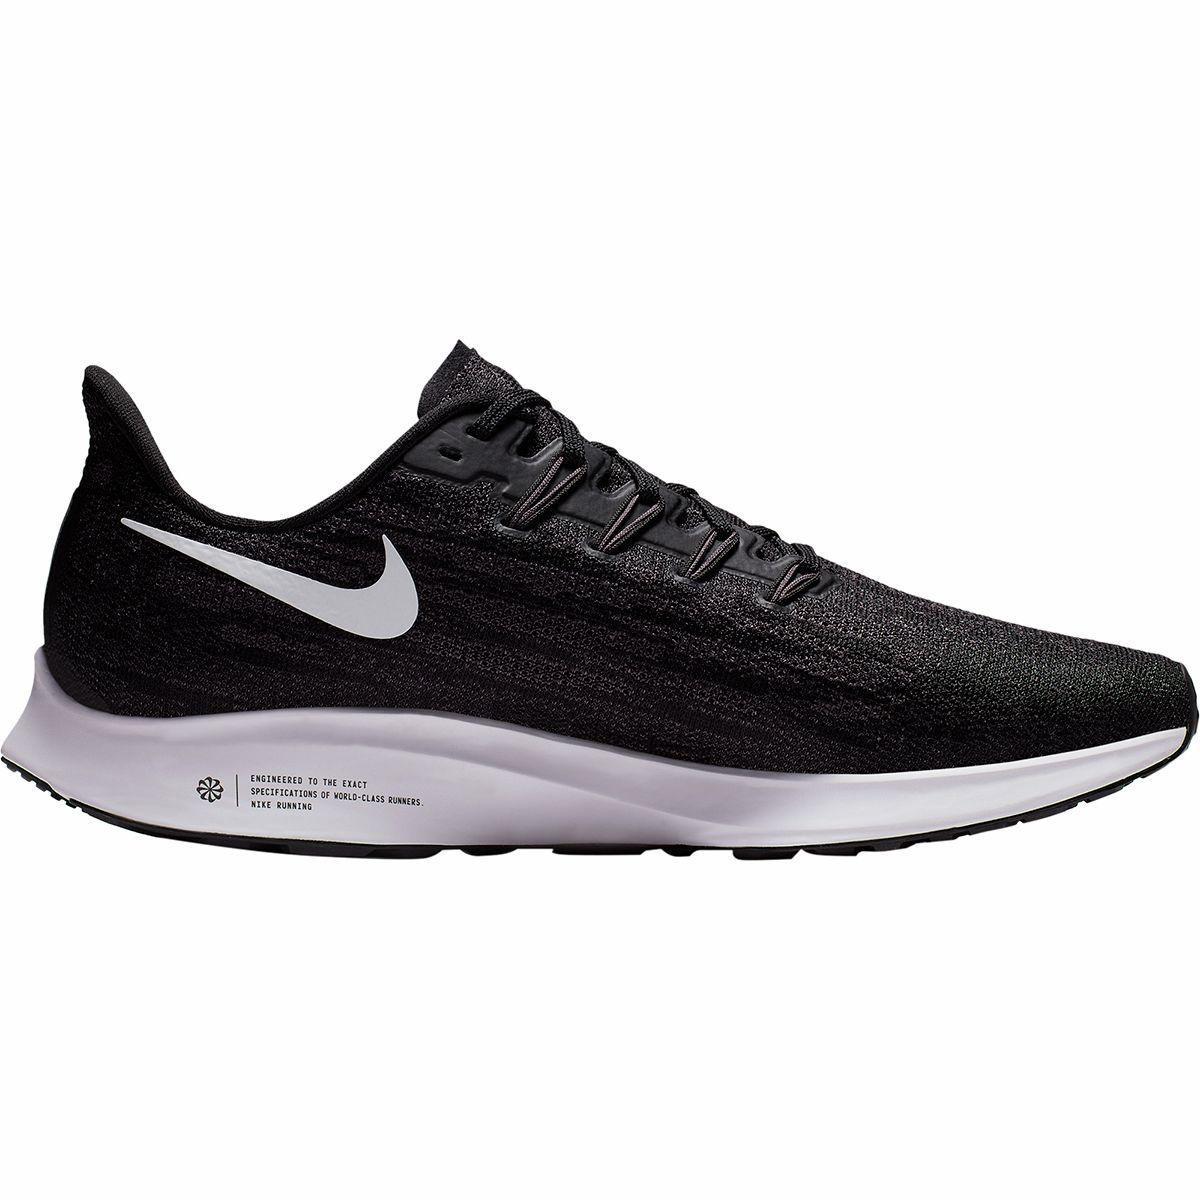 Nike Lace Air Zoom Pegasus 36 Running Shoe in Black for Men - Lyst